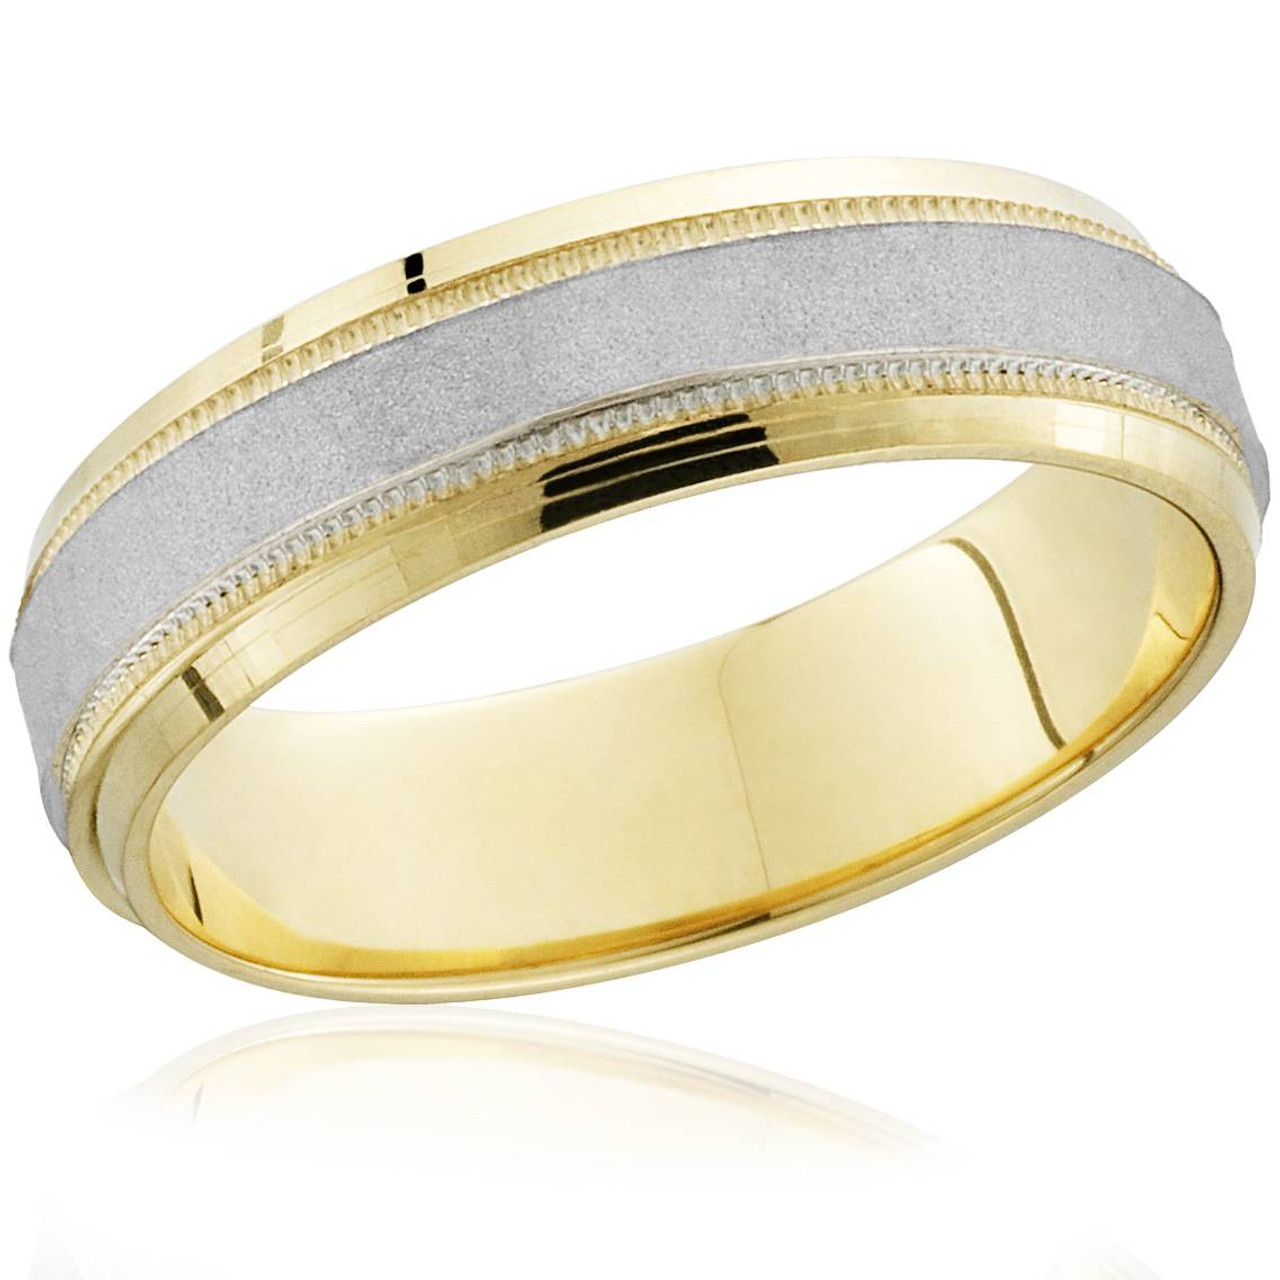 18k Gold & Platinum Brushed Two Tone Wedding Band Ring